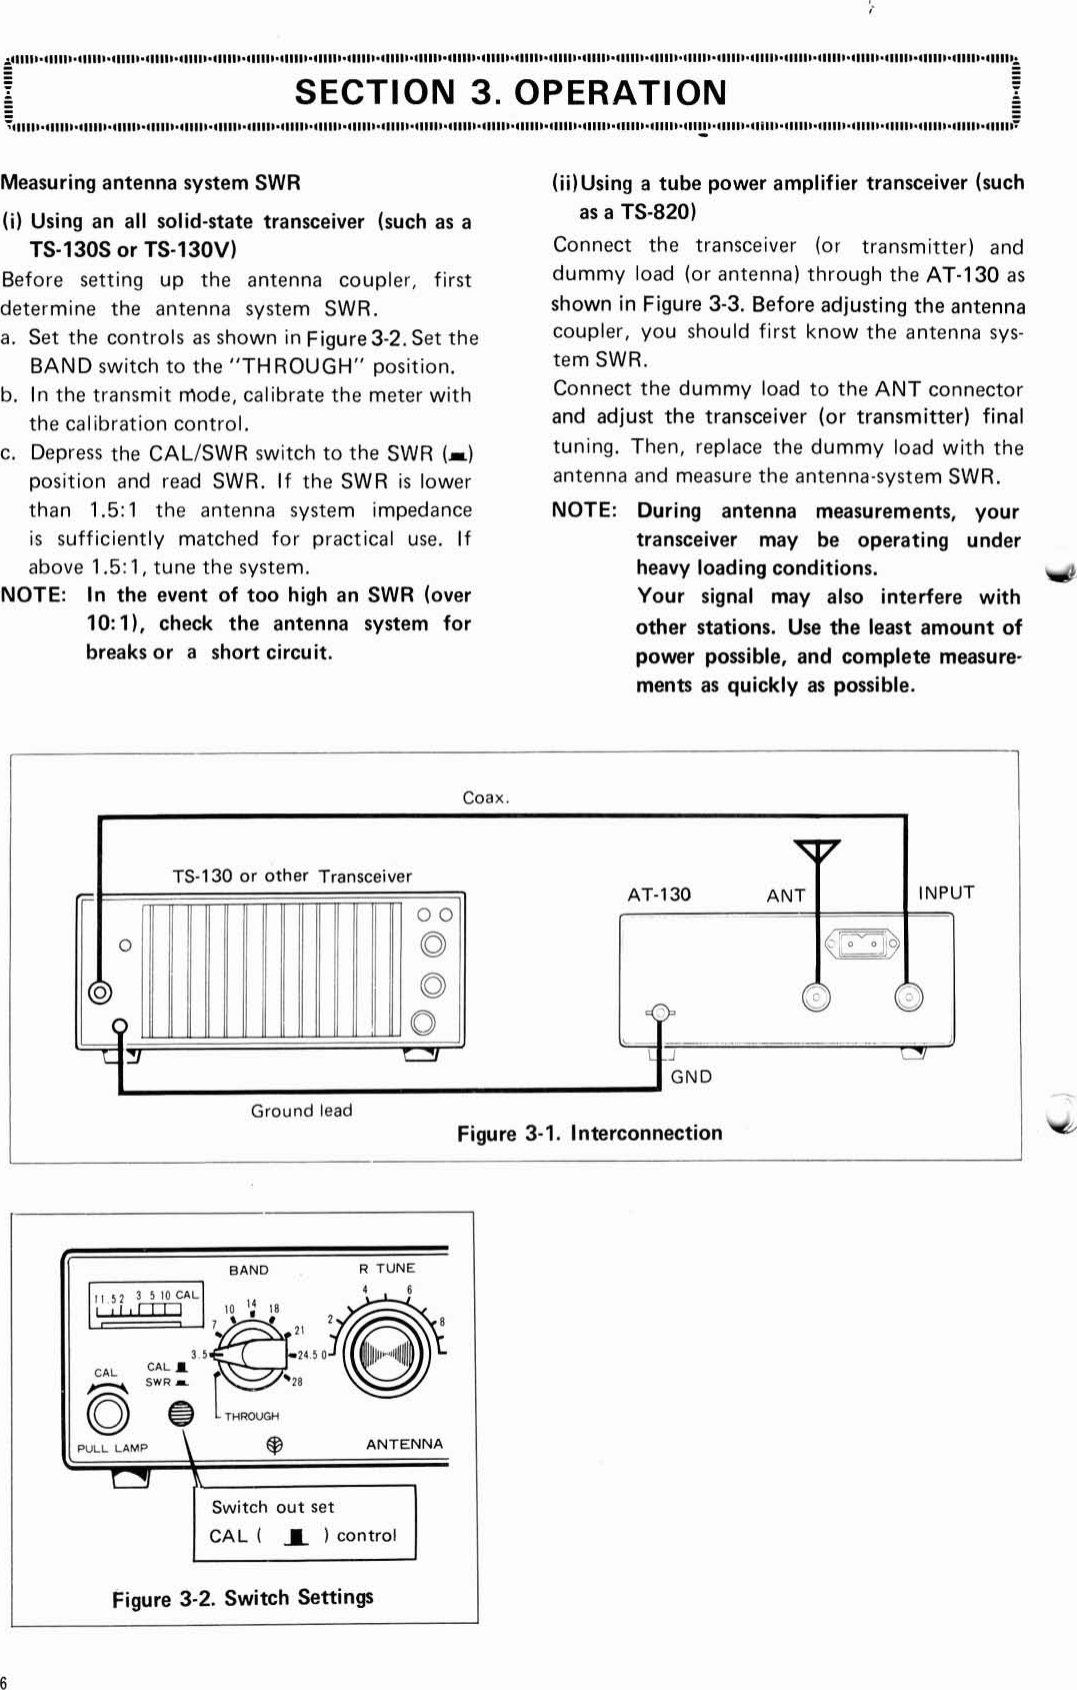 Page 6 of 12 - Kenwood Kenwood-Kenwood-Car-Stereo-System-At-130-Users-Manual- Antenna Tuner AT-130 Instruction Manual  Kenwood-kenwood-car-stereo-system-at-130-users-manual